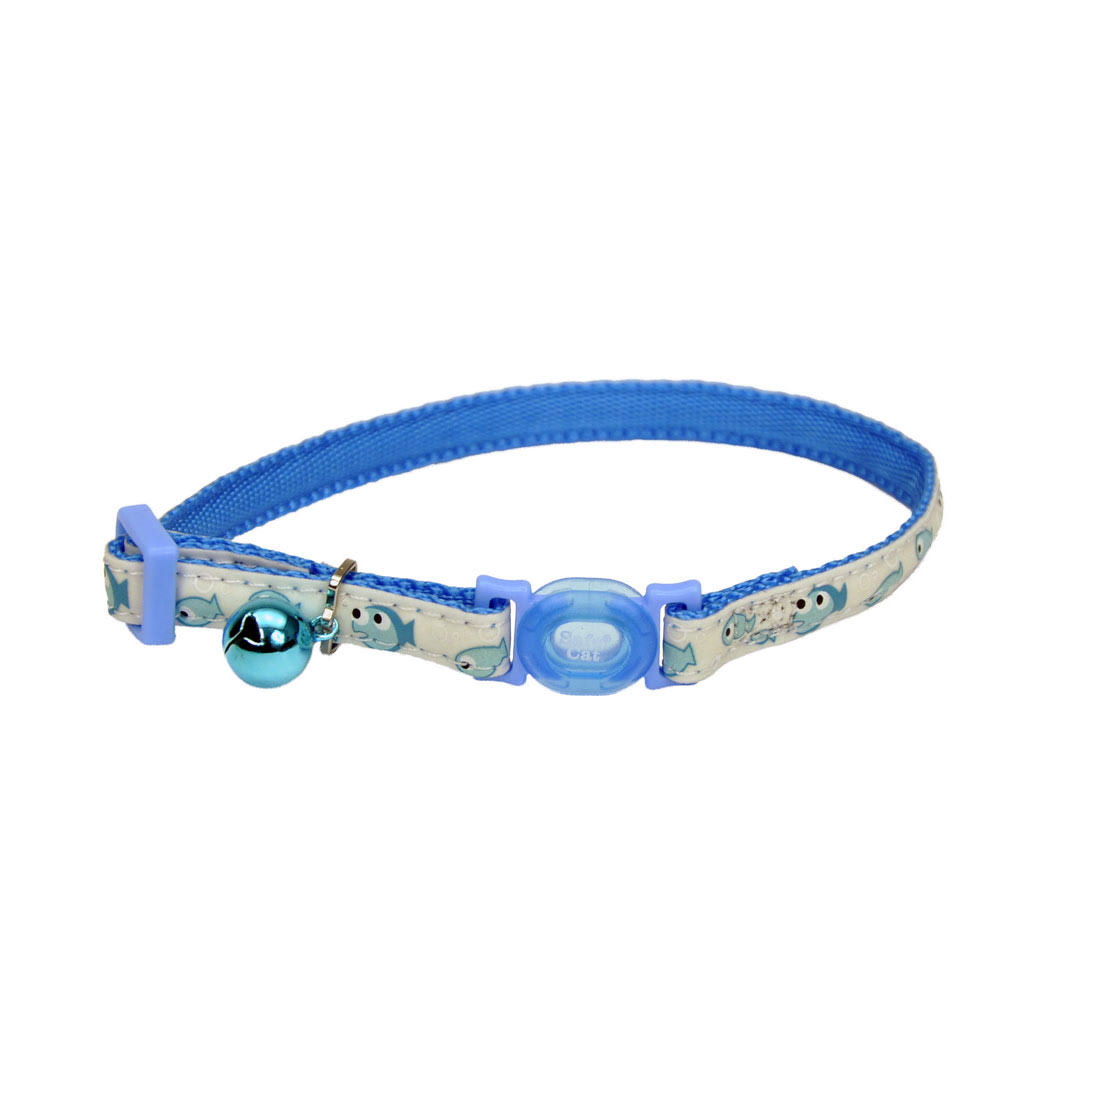 Safe Cat Glow in The Dark Adjustable Safety Breakaway Cat Collar - Blue